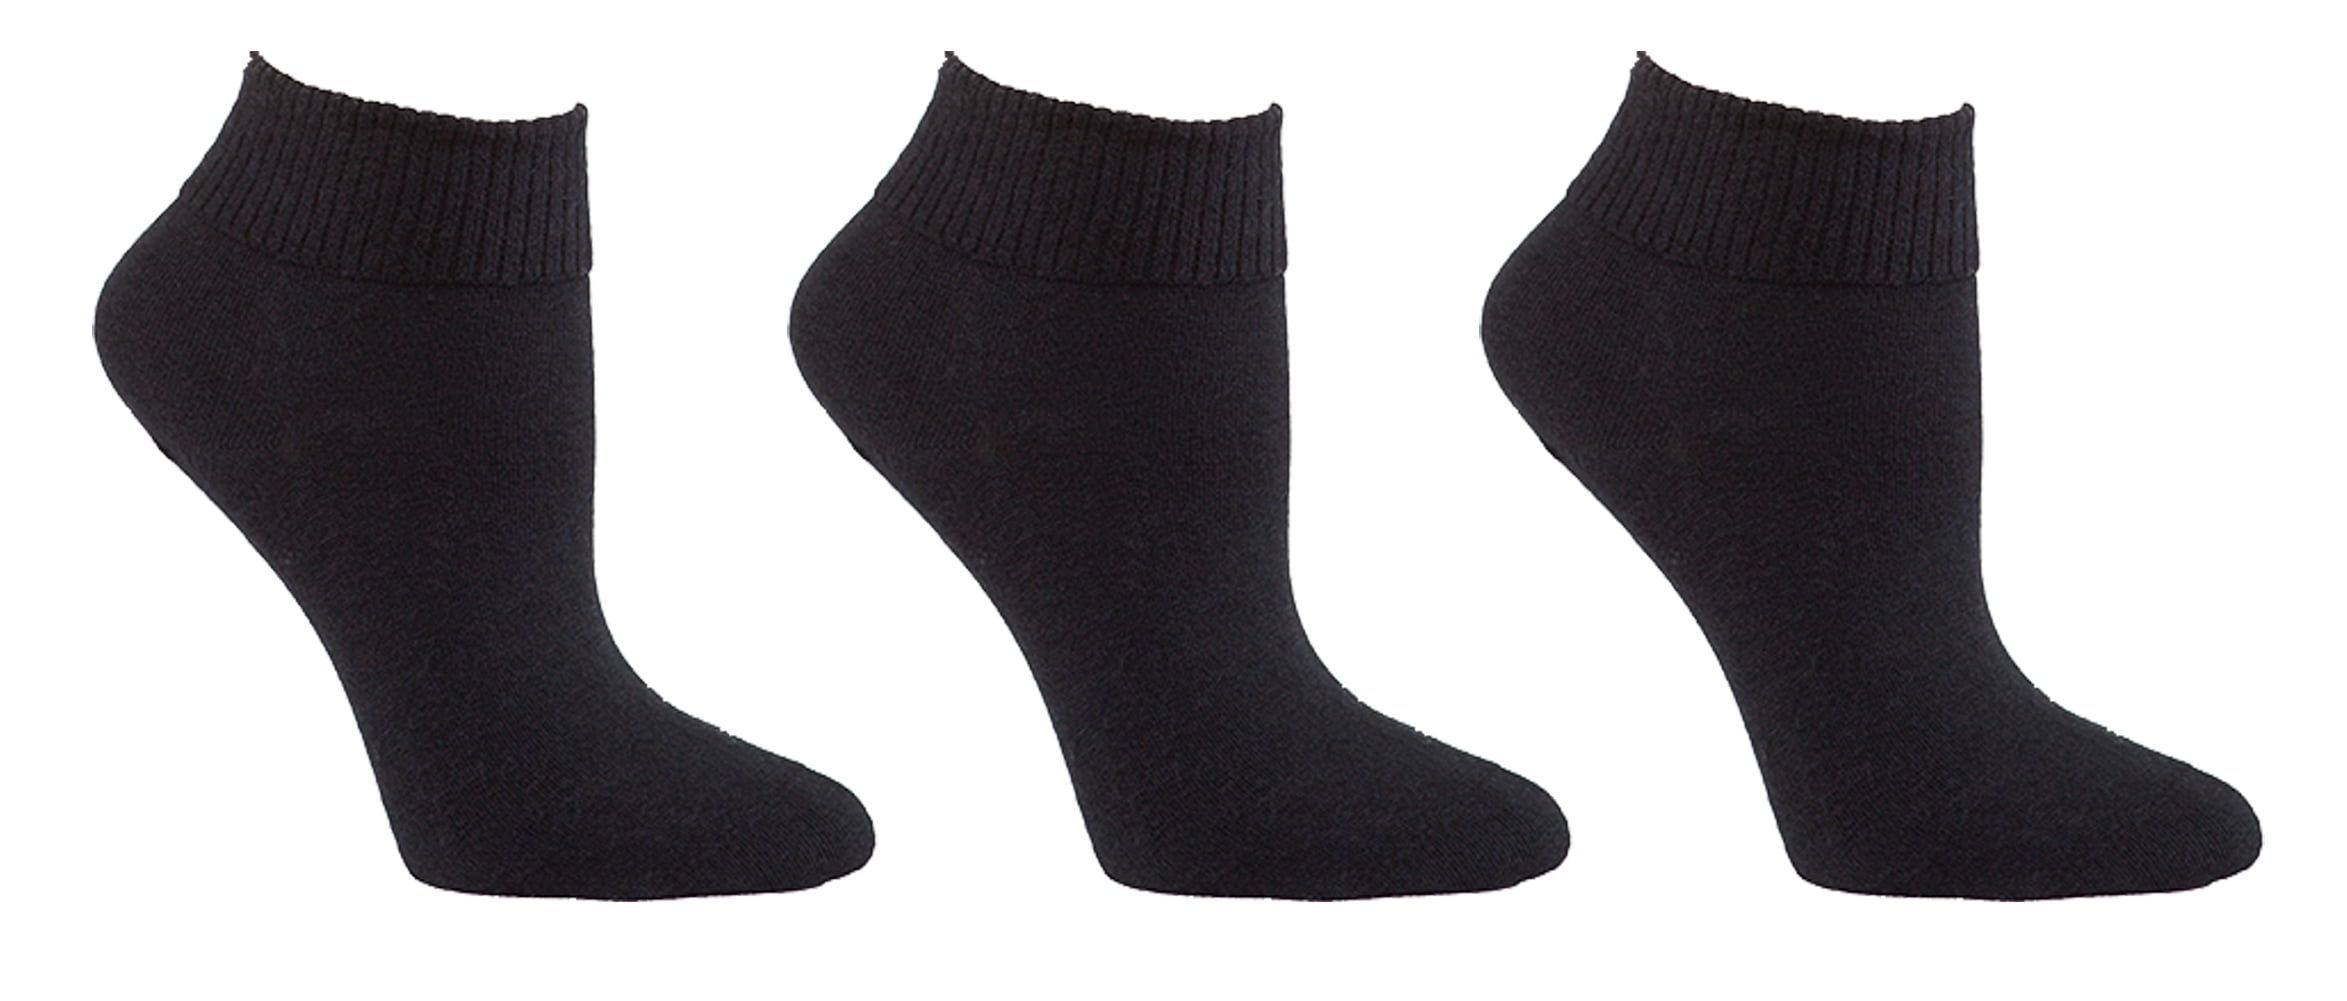 Health & Comfort 3 Pack Ankle Socks | Diabetic Socks - Walmart.com